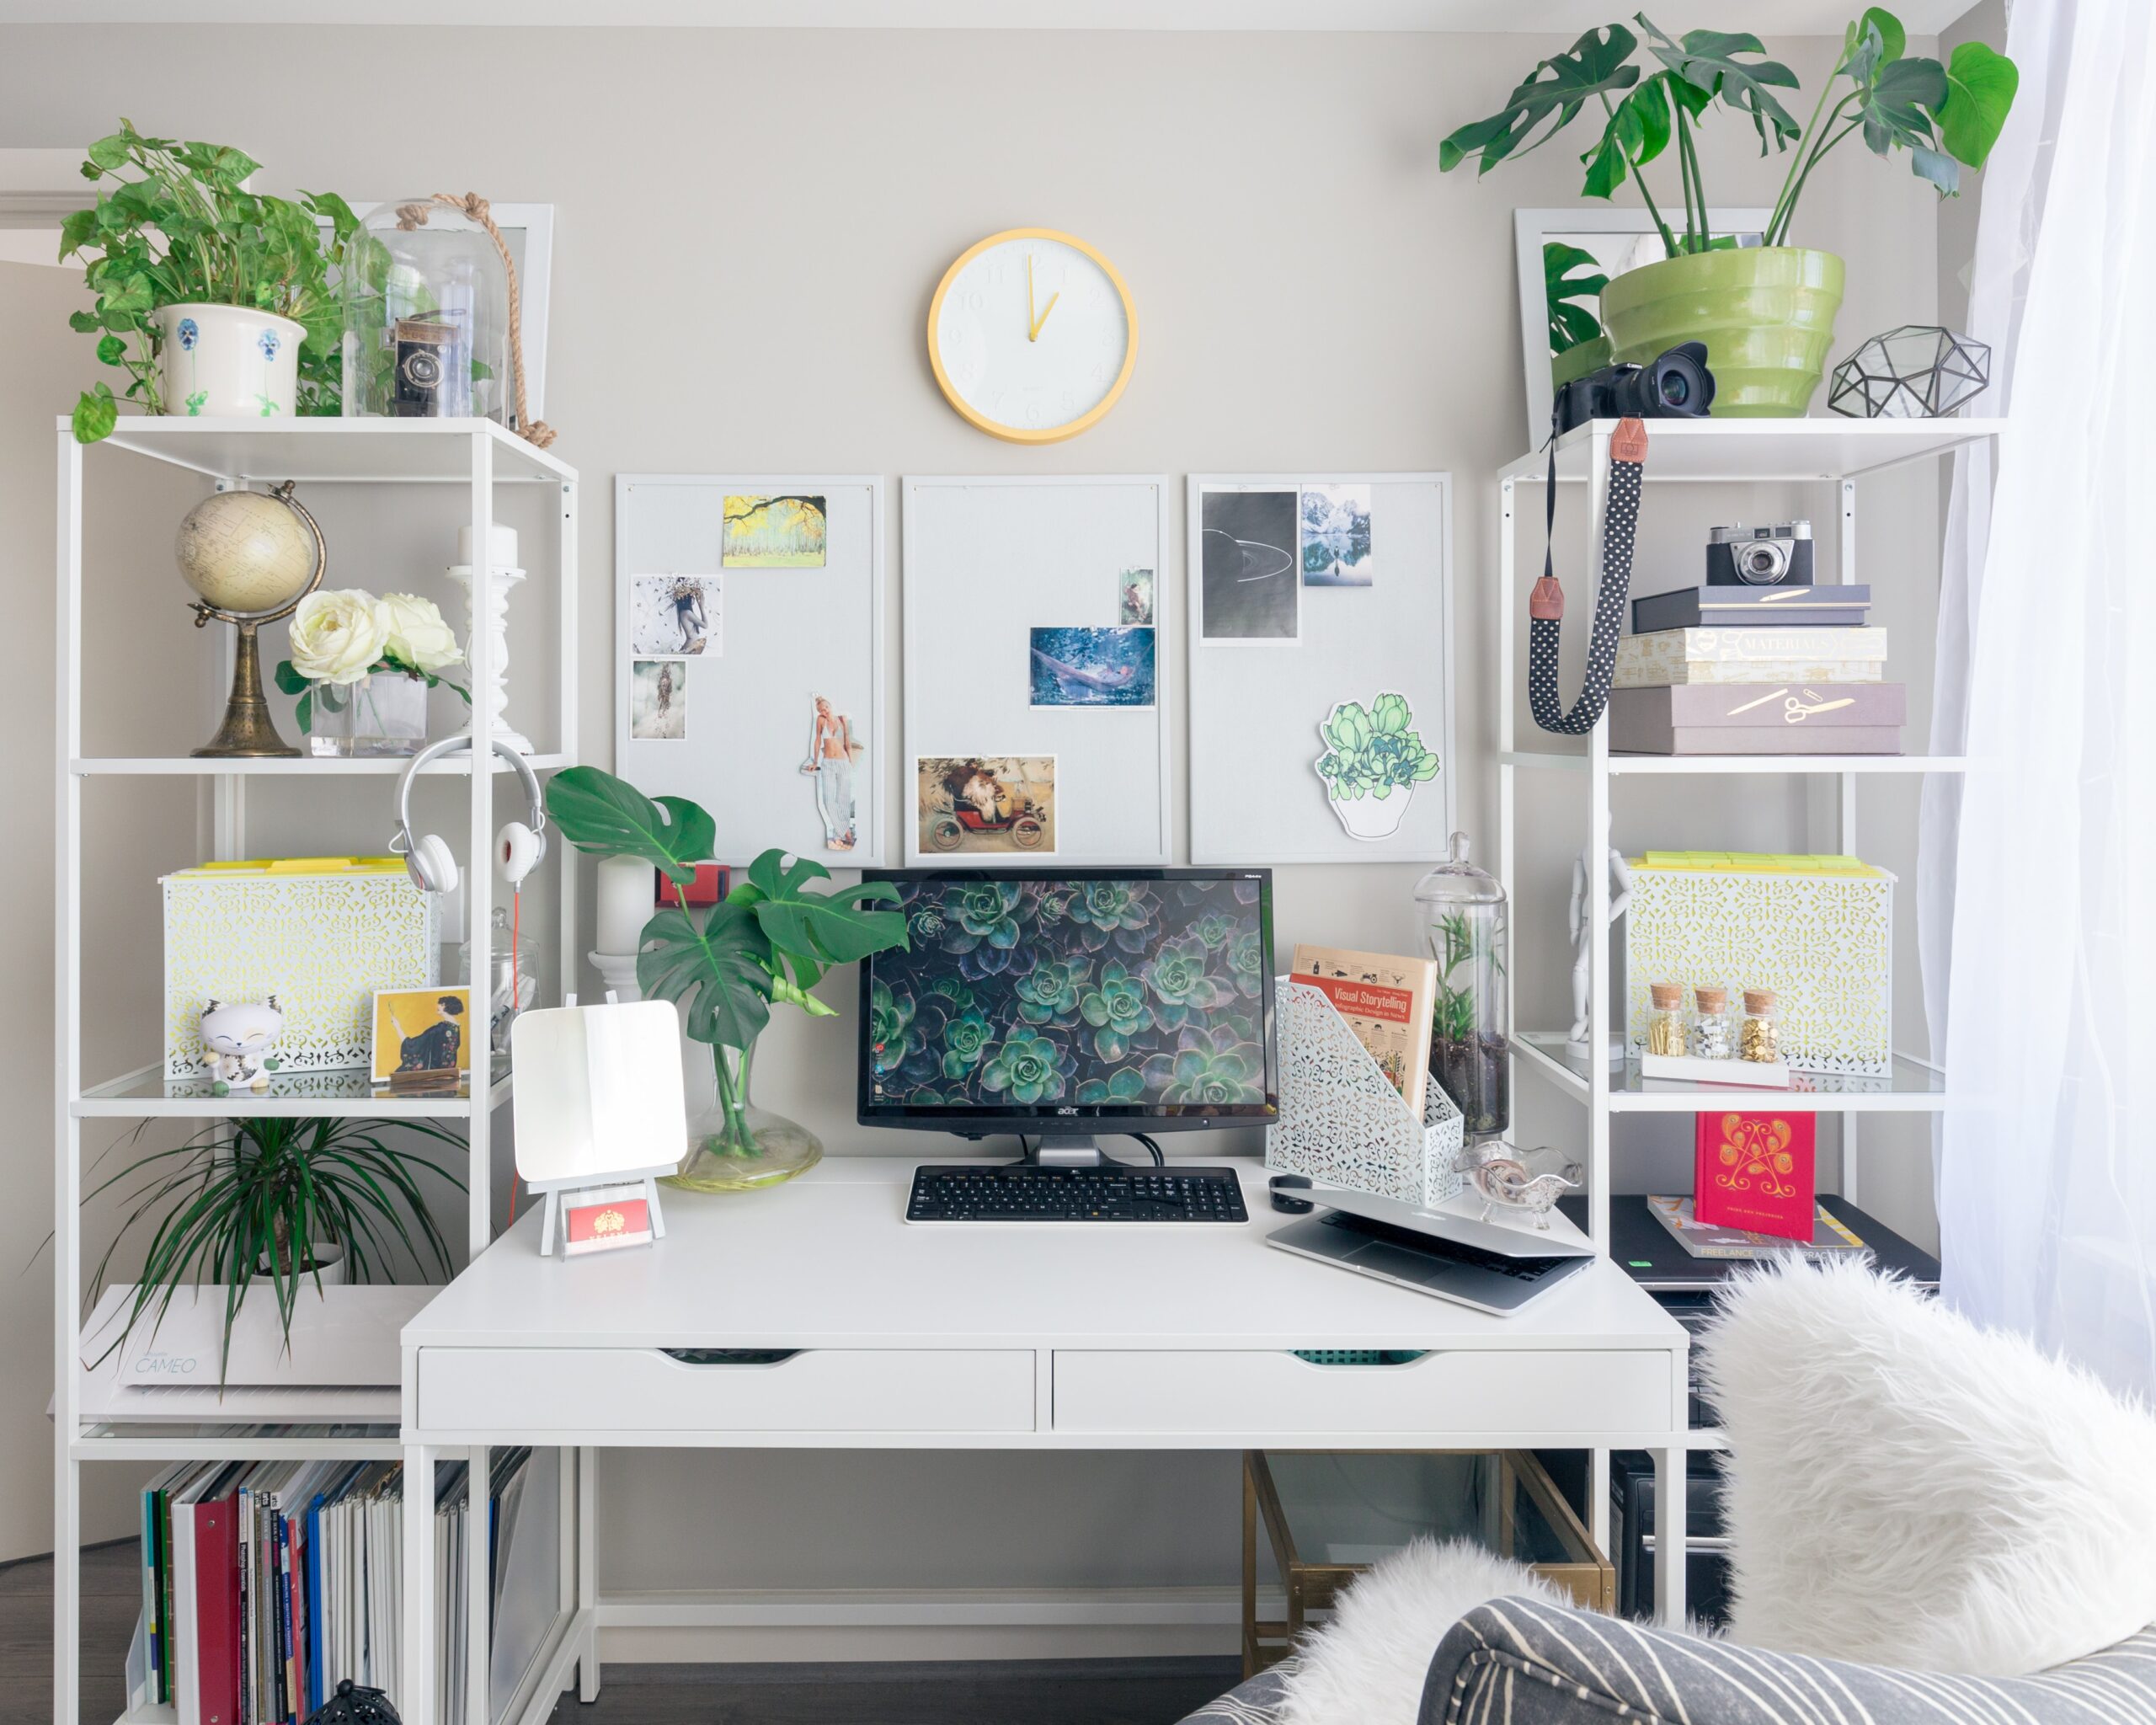 amenajare birou cu plante verzi